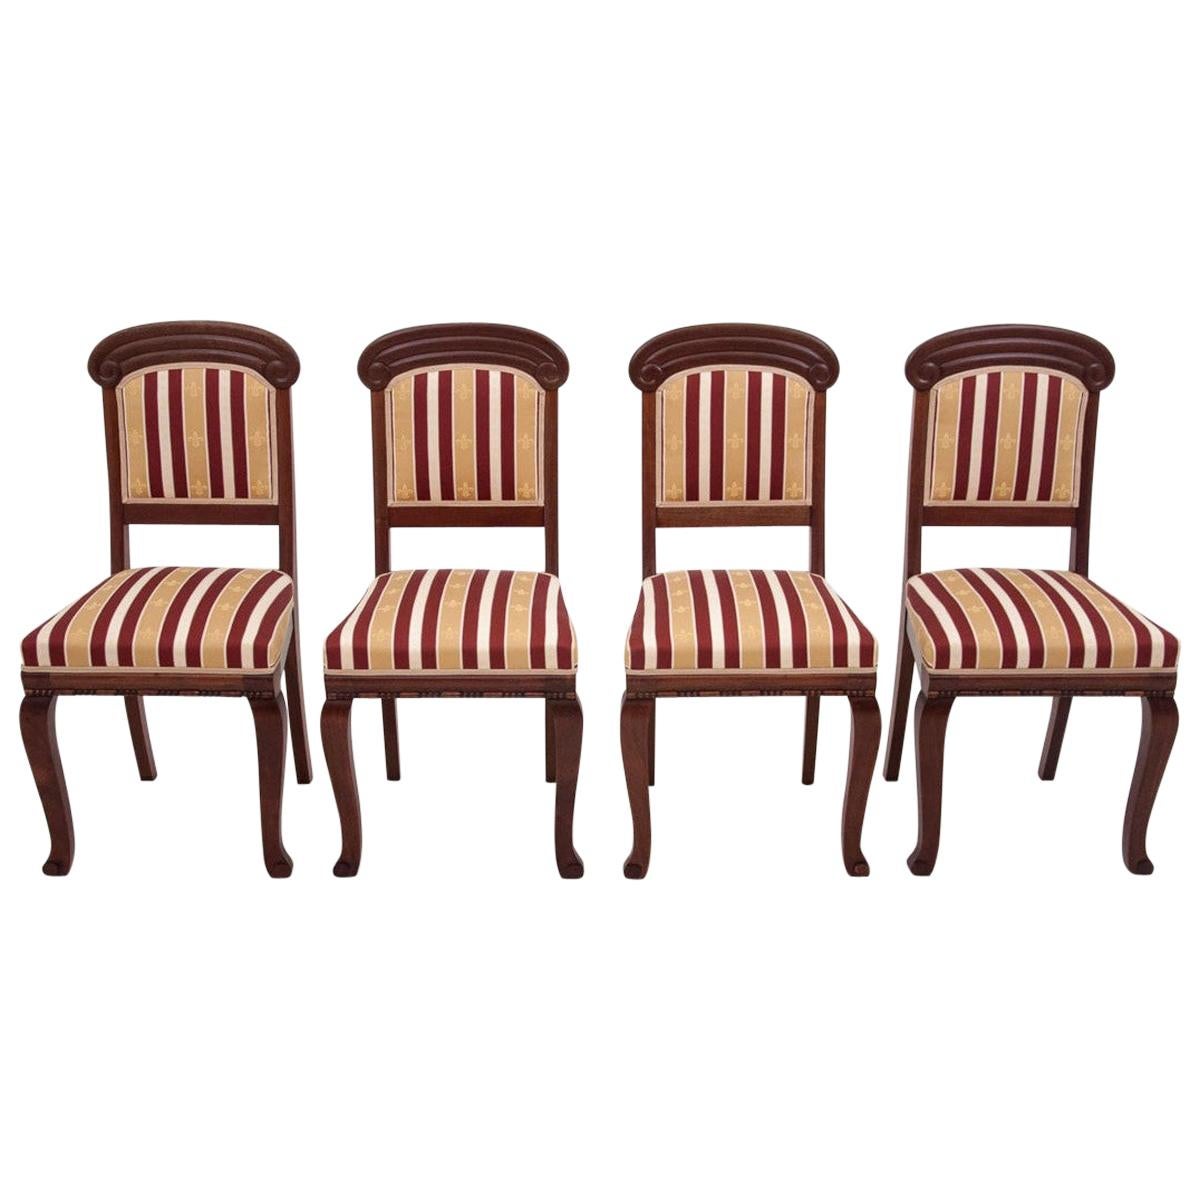 Four Biedermeier Dining Room Chairs